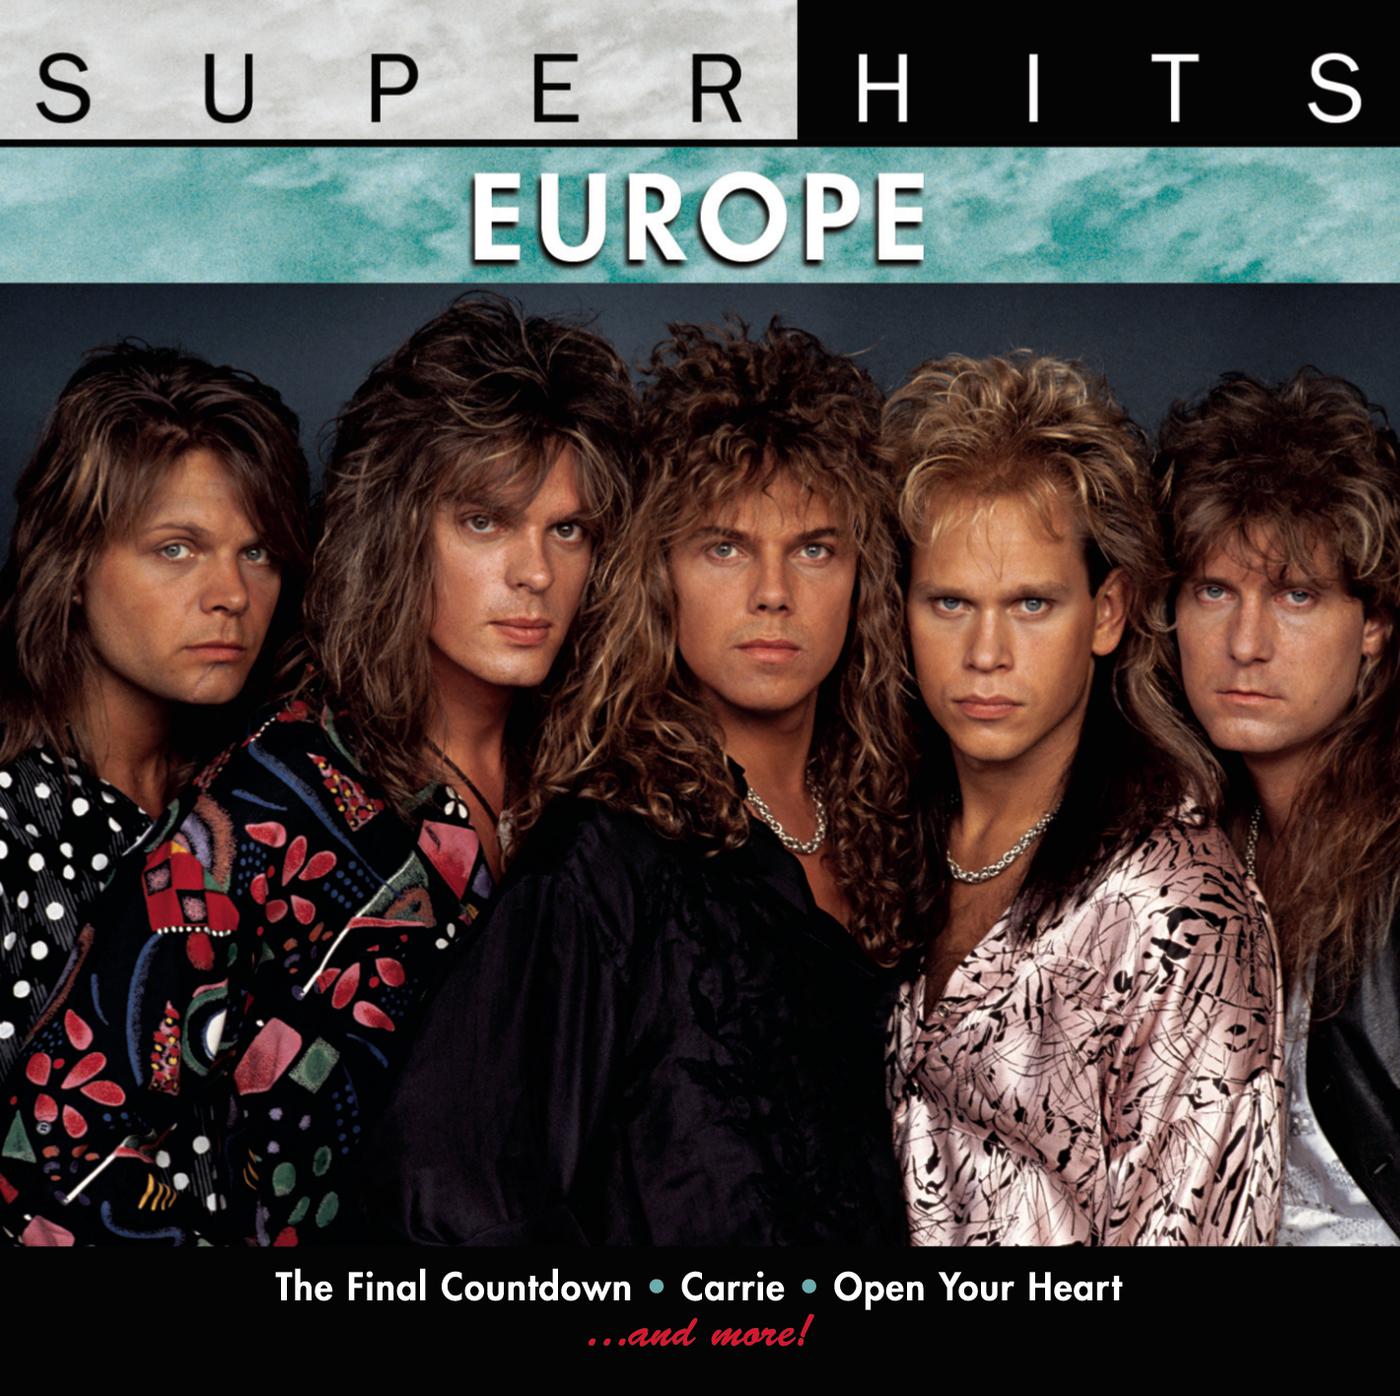 Europe песни. Europa группа the Final Countdown. Europe обложка. Europe группа обложки. Группа Европа последний отсчет.